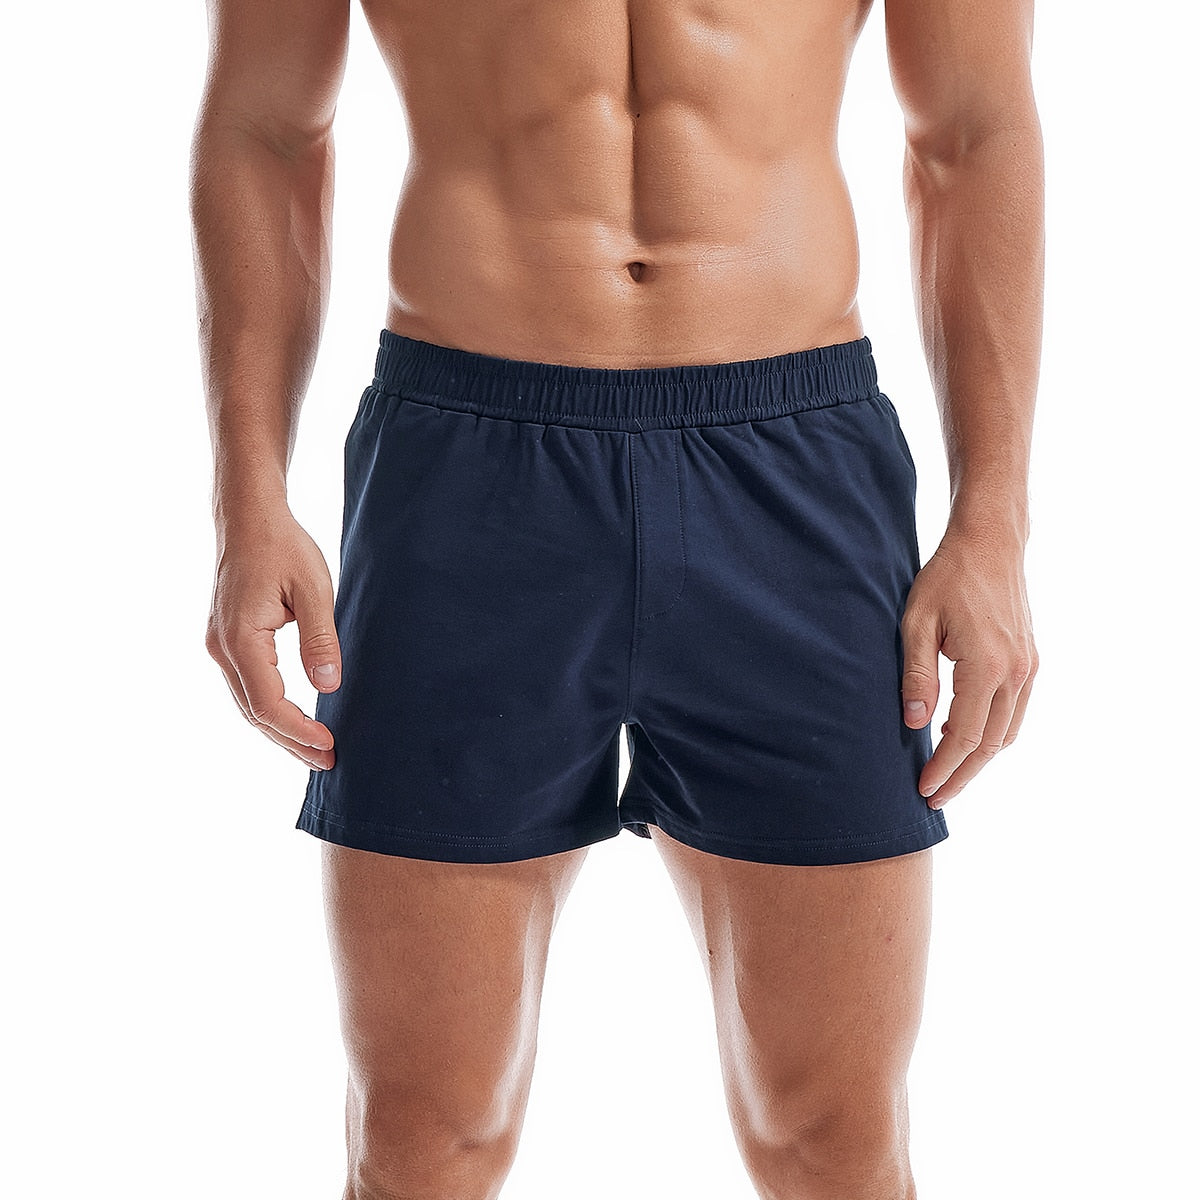 Mens Cotton Sleep Bottoms Lounge Home Pajama Shorts Elastic Waist Breathable Solid Underwear Boxers Man Jogger Yoga Sport Shorts